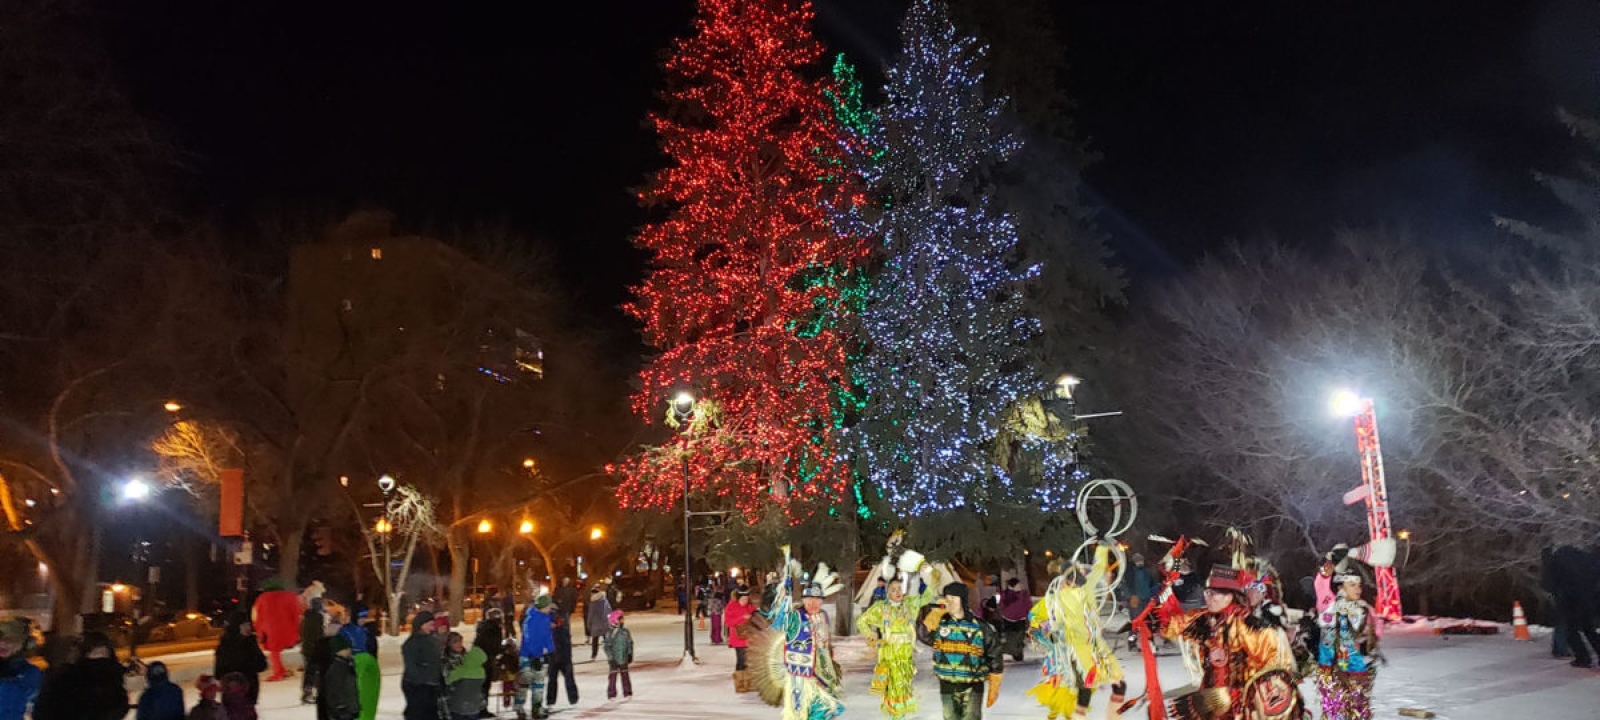 8 Free Activities to Enjoy in Saskatoon this Winter